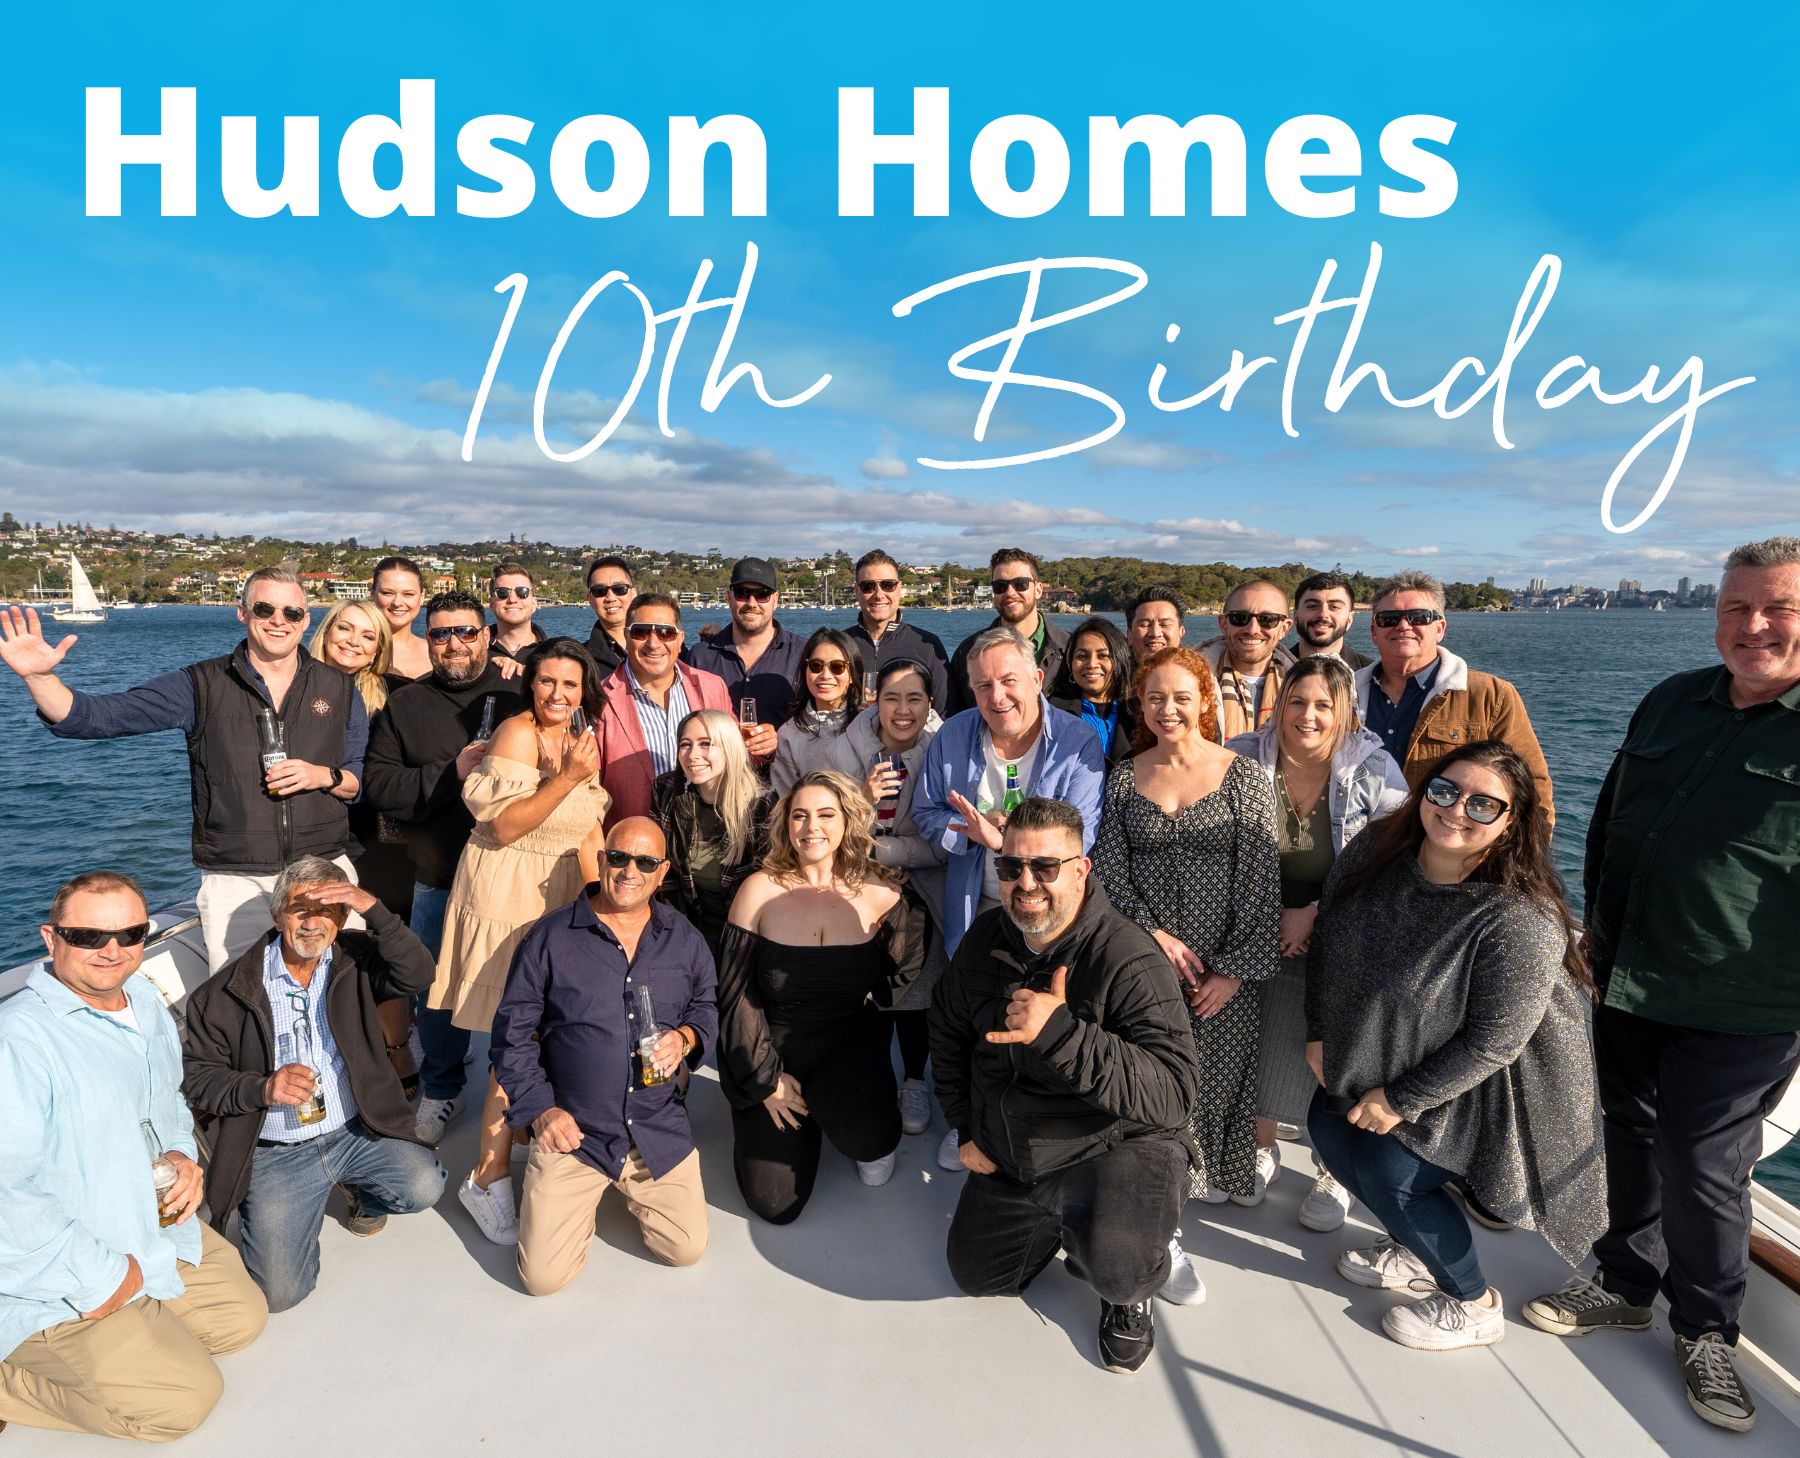 Hudson Homes Celebrates their 10th Anniversary